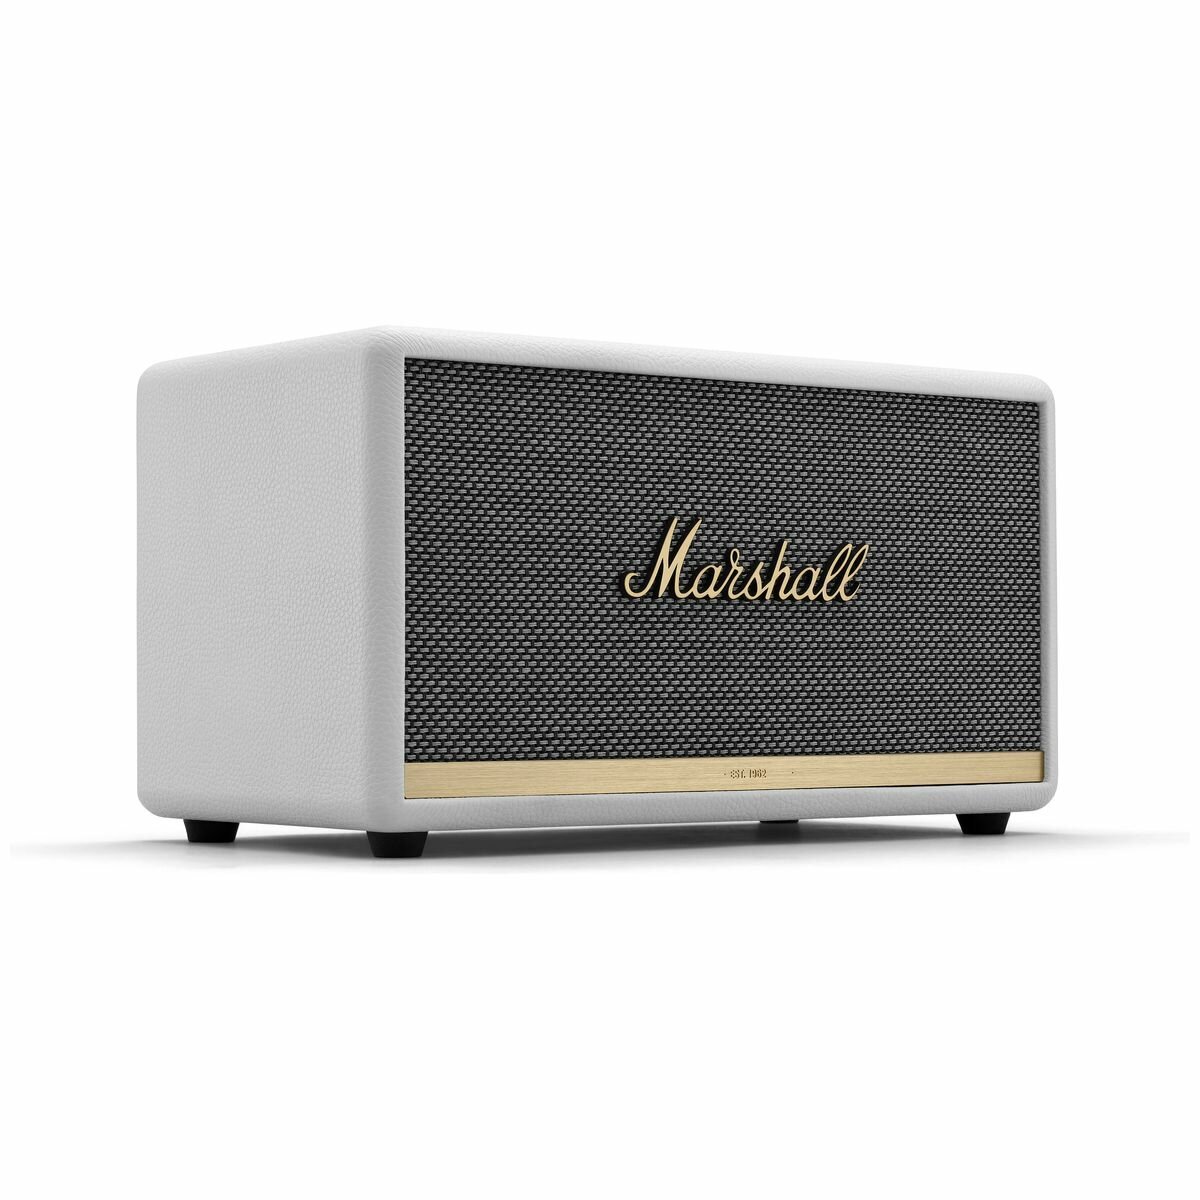 Wireless | Speaker Appliances Bluetooth II White 155689 Stanmore Online Marshall